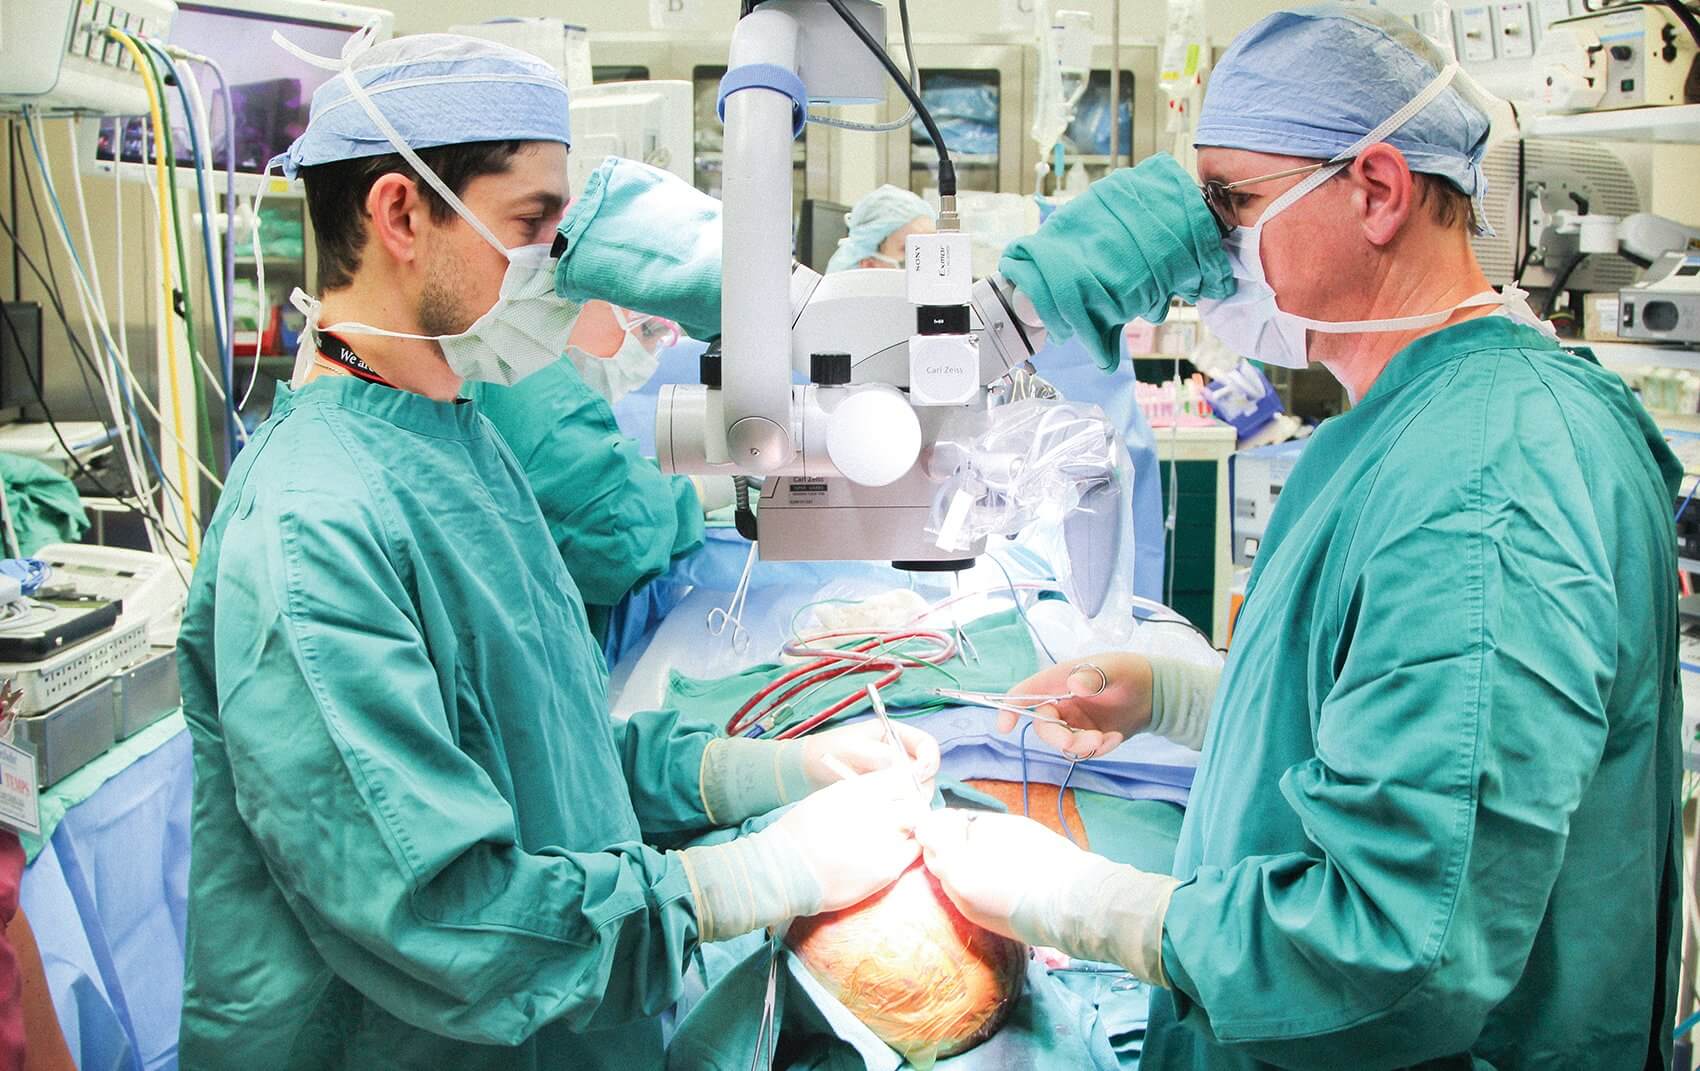 MD Anderson’s Jesse Selber, M.D., (left) and Houston Methodist’s Michael Klebuc, M.D., operate on Jim Boysen’s skull and scalp. (Credit: Houston Methodist Hospital)